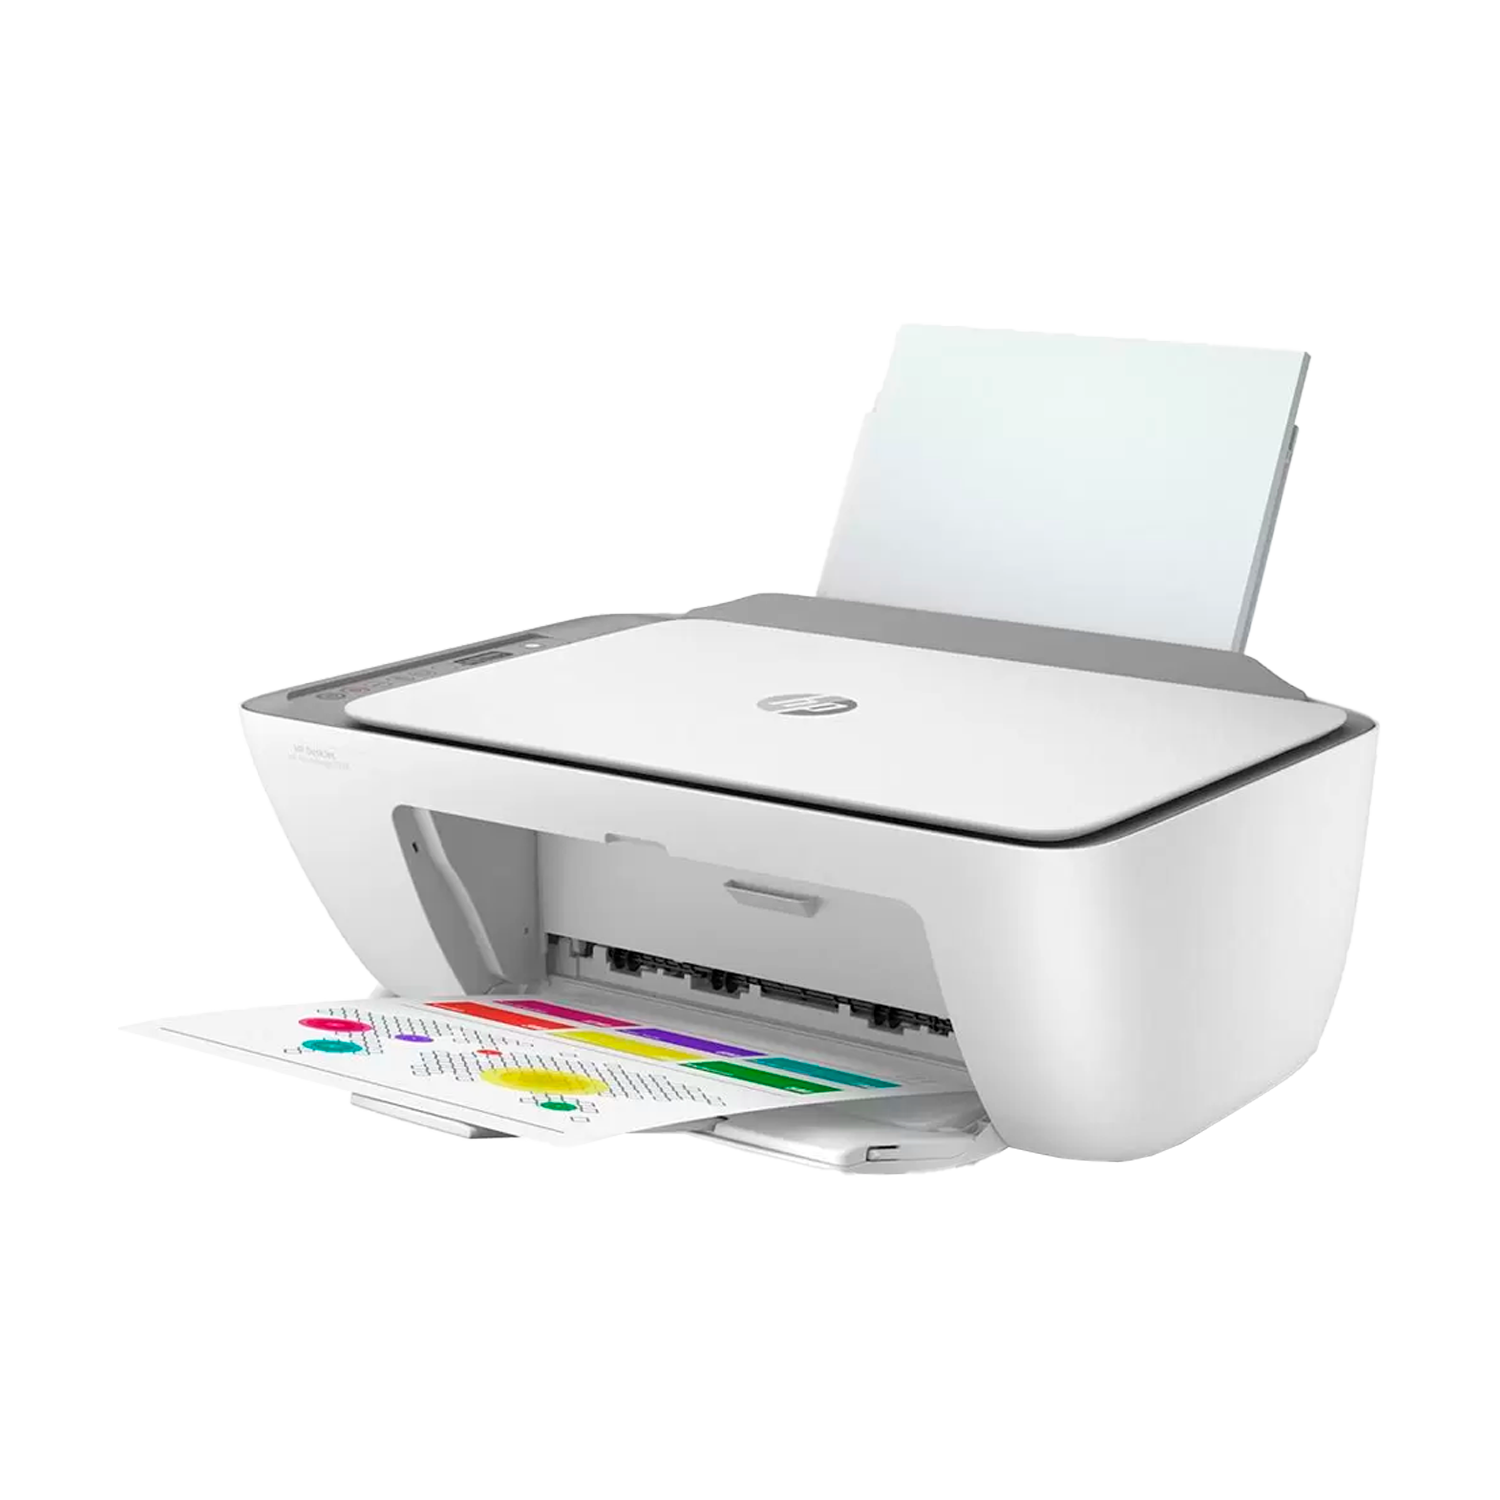 Impressora Multifuncional HP Deskjet 2775 / Scan / WIFI / Bivolt - (Cartucho 667 Preto/Colorido)